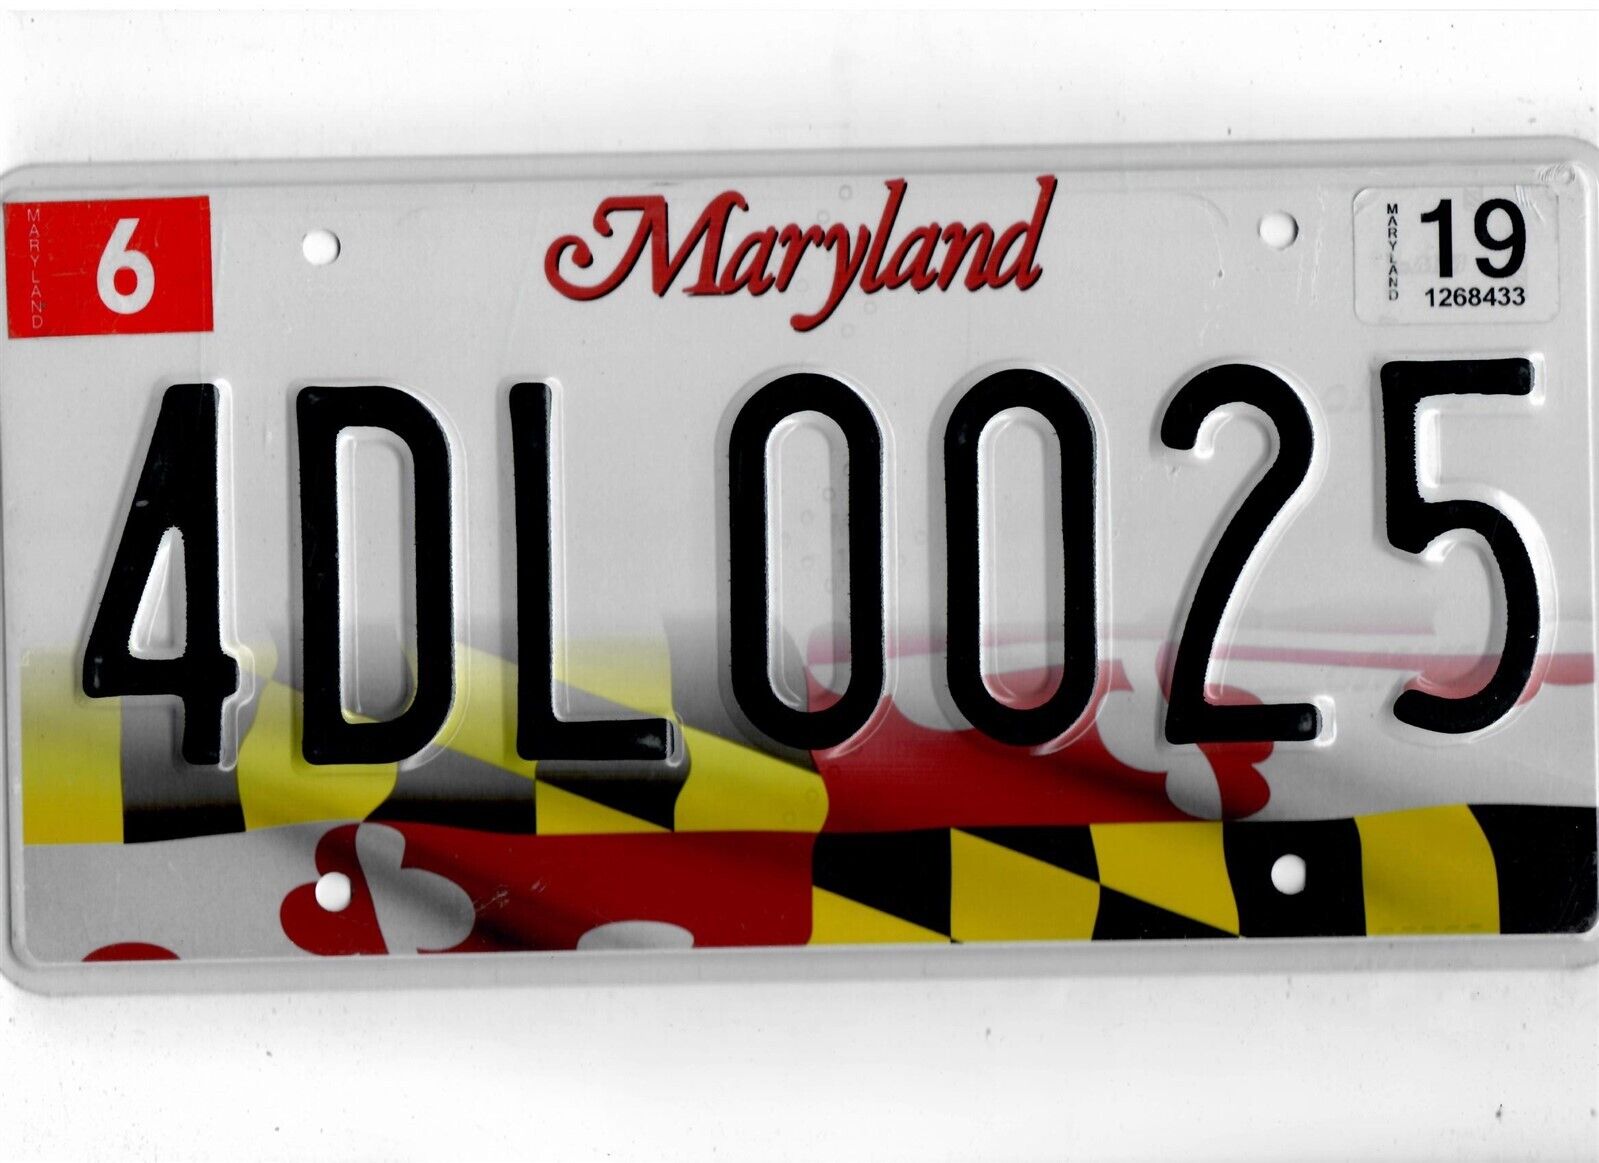 MARYLAND passenger 2019 license plate 